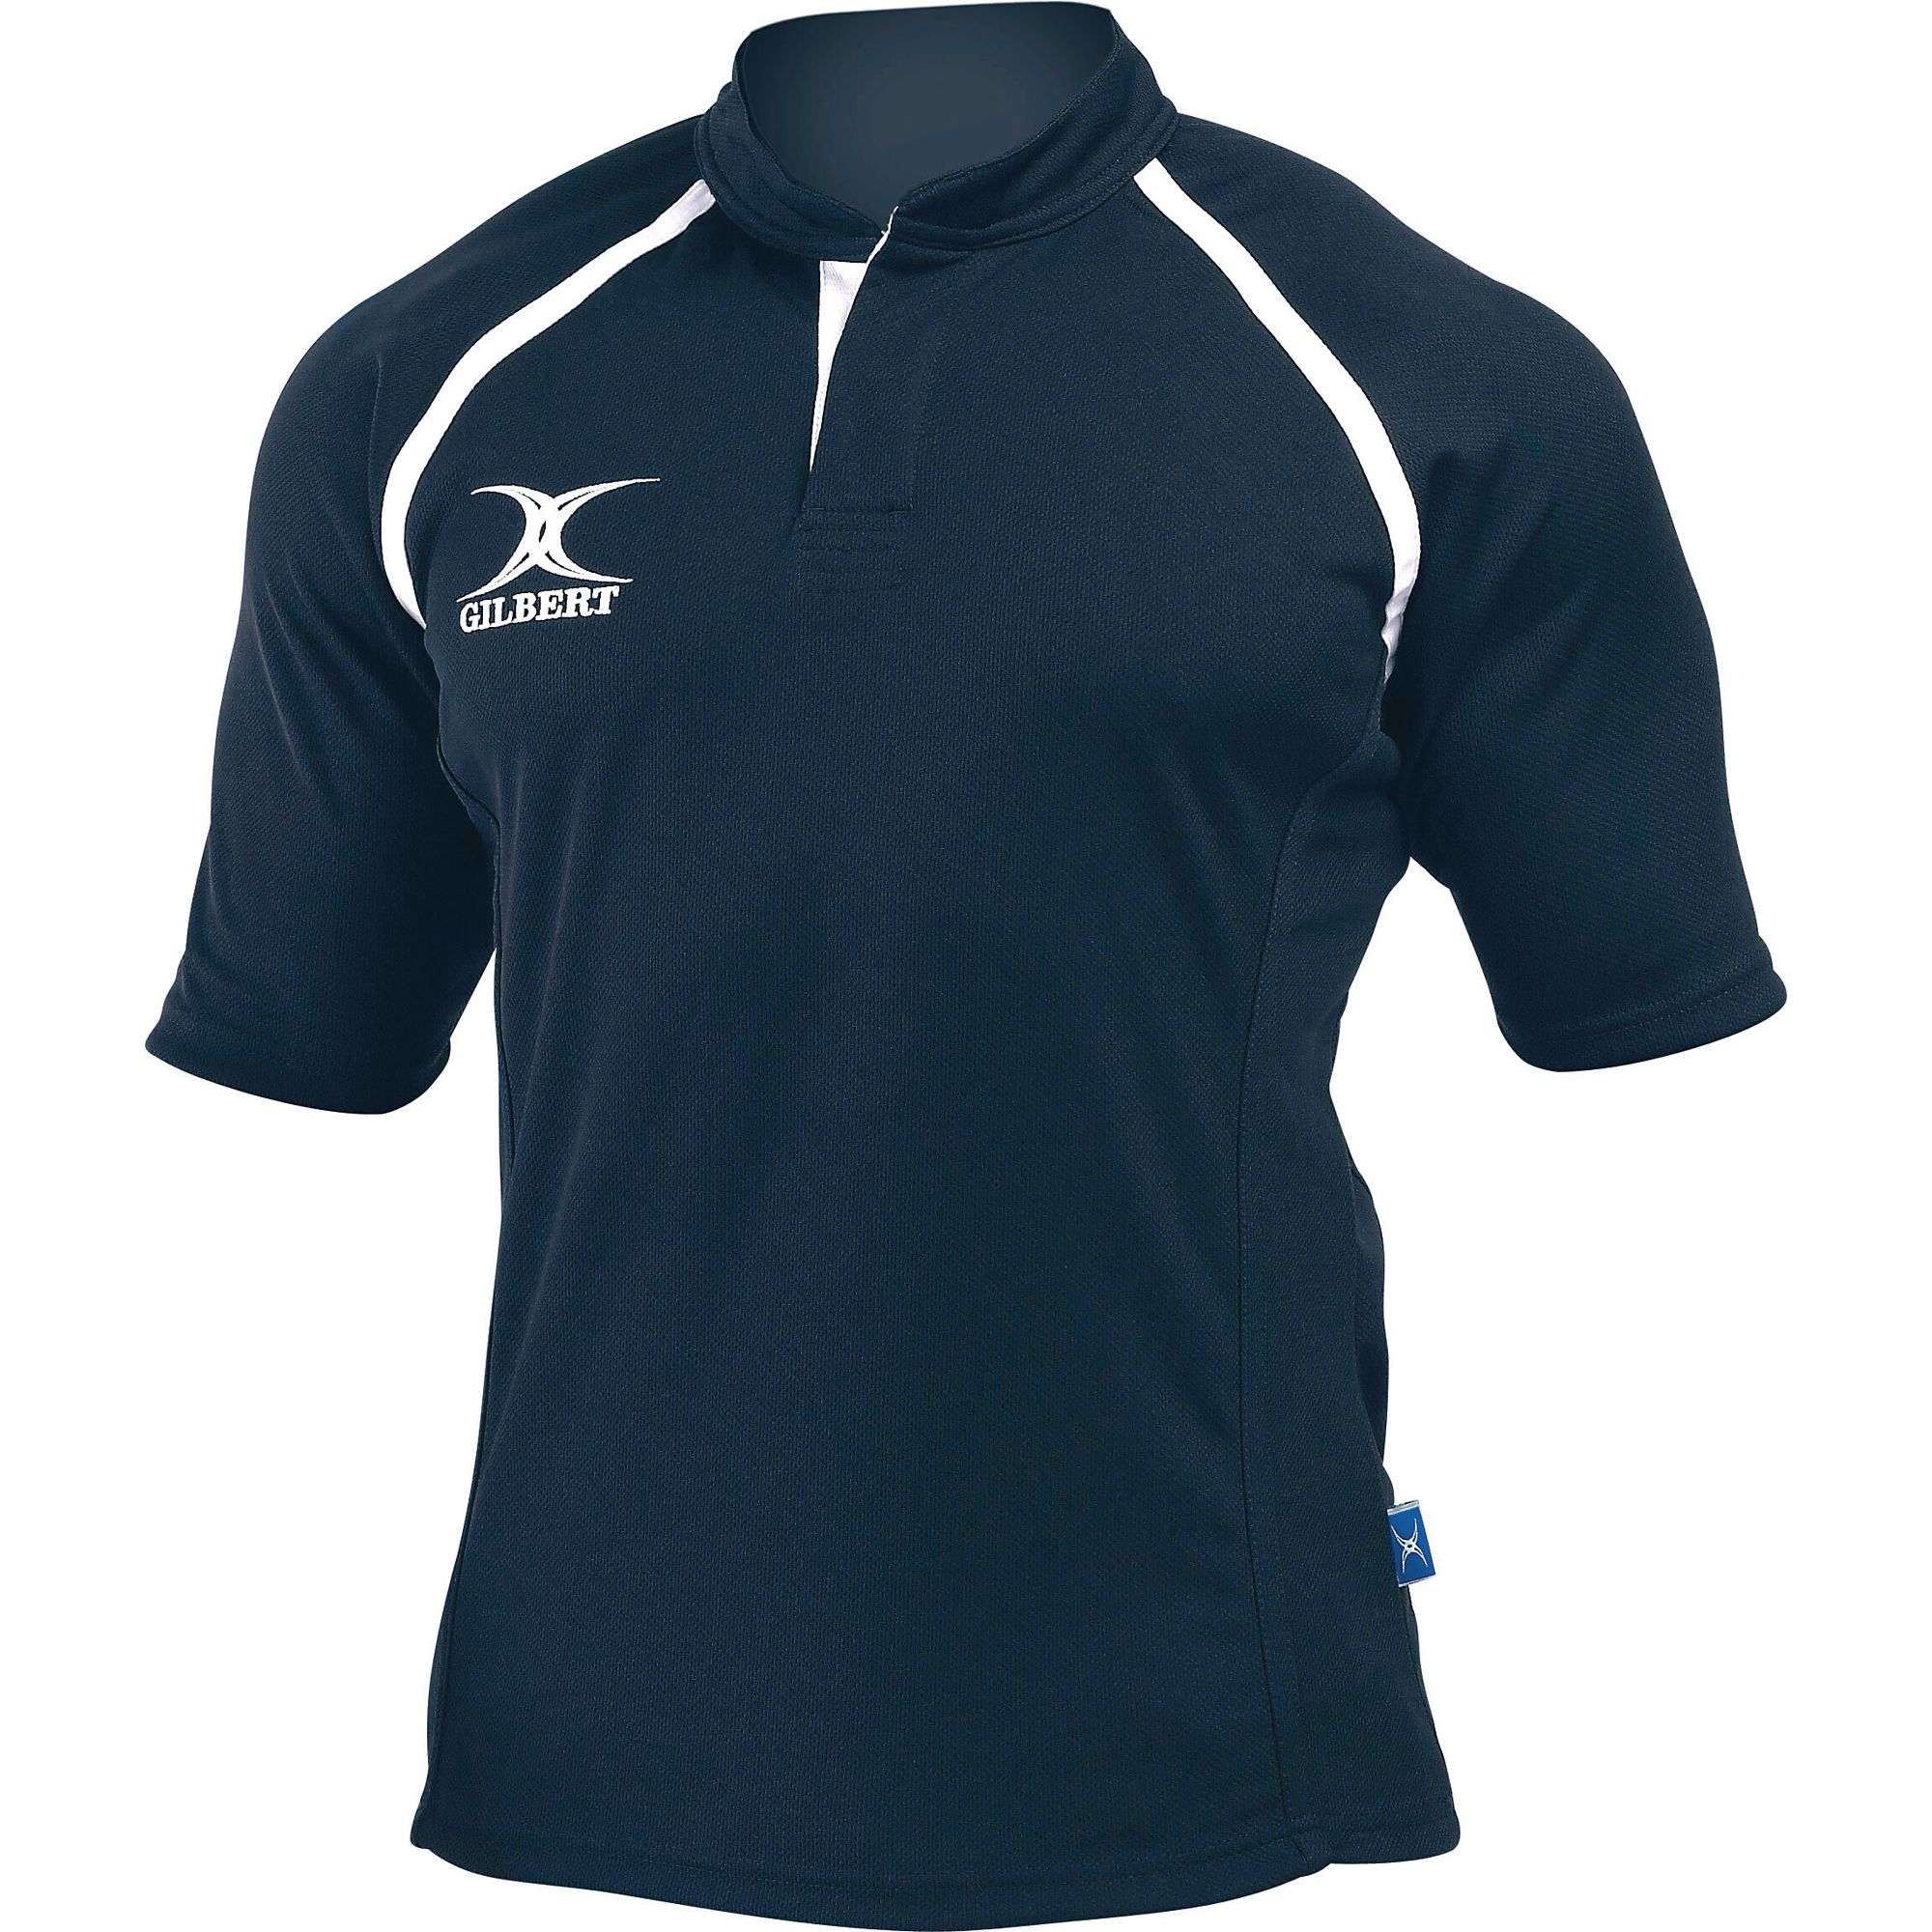 Gilbert Plain Rugby Shirt 24in Dark Navy